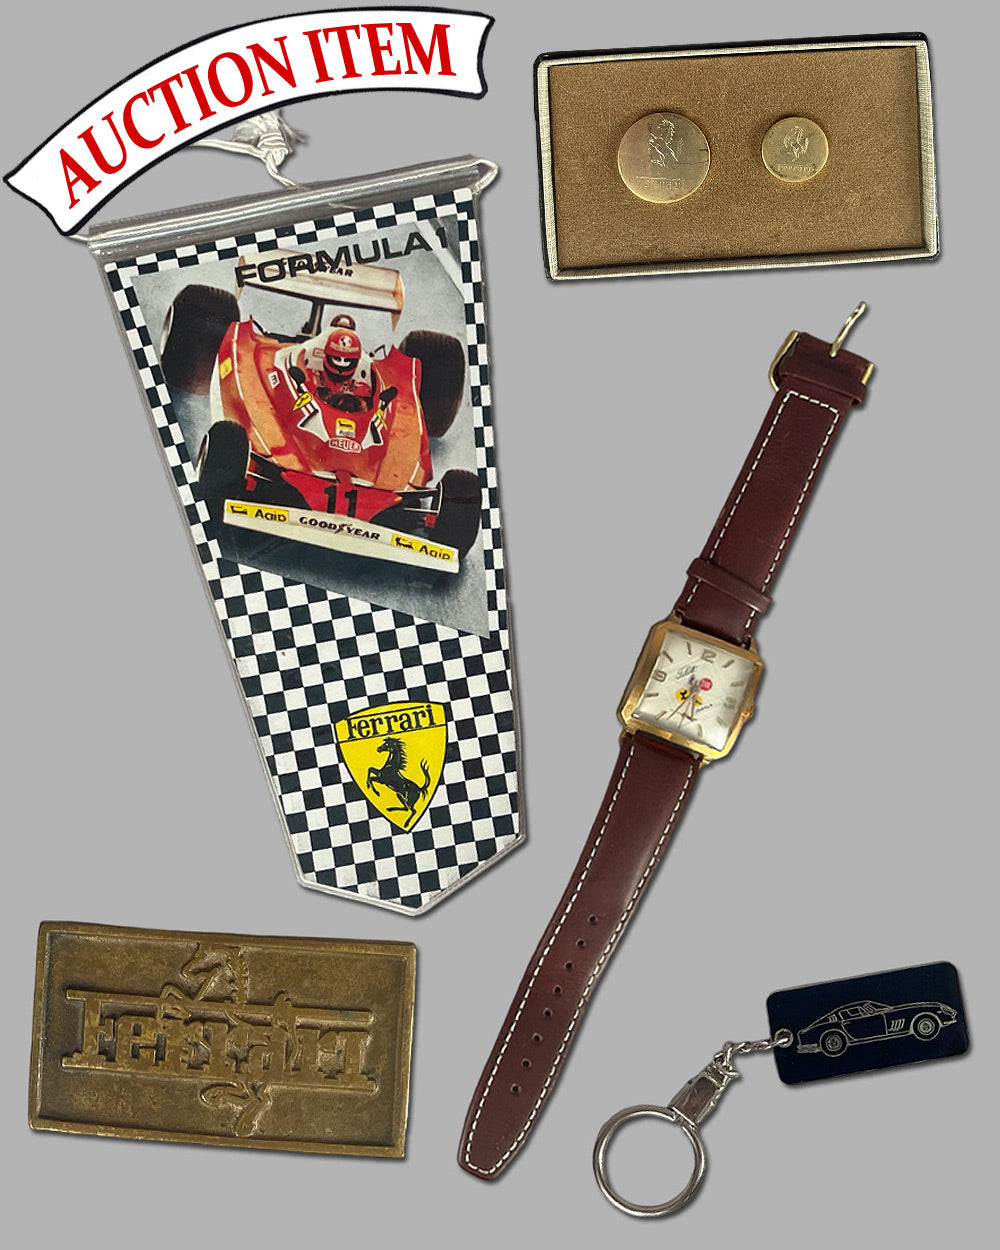 14 - Collection of 5 Ferrari memorabilia items